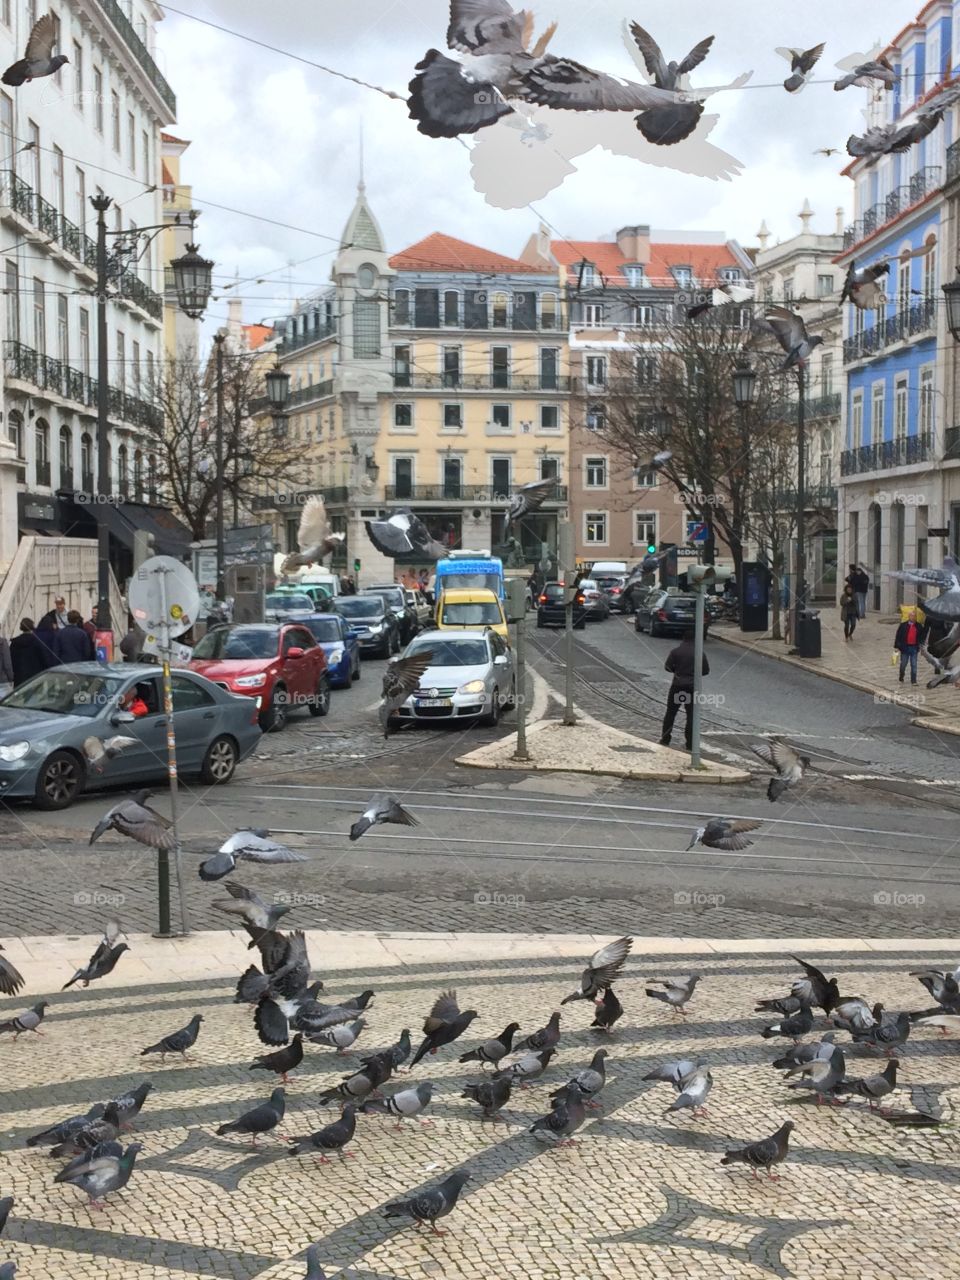 Pigeons  on the street